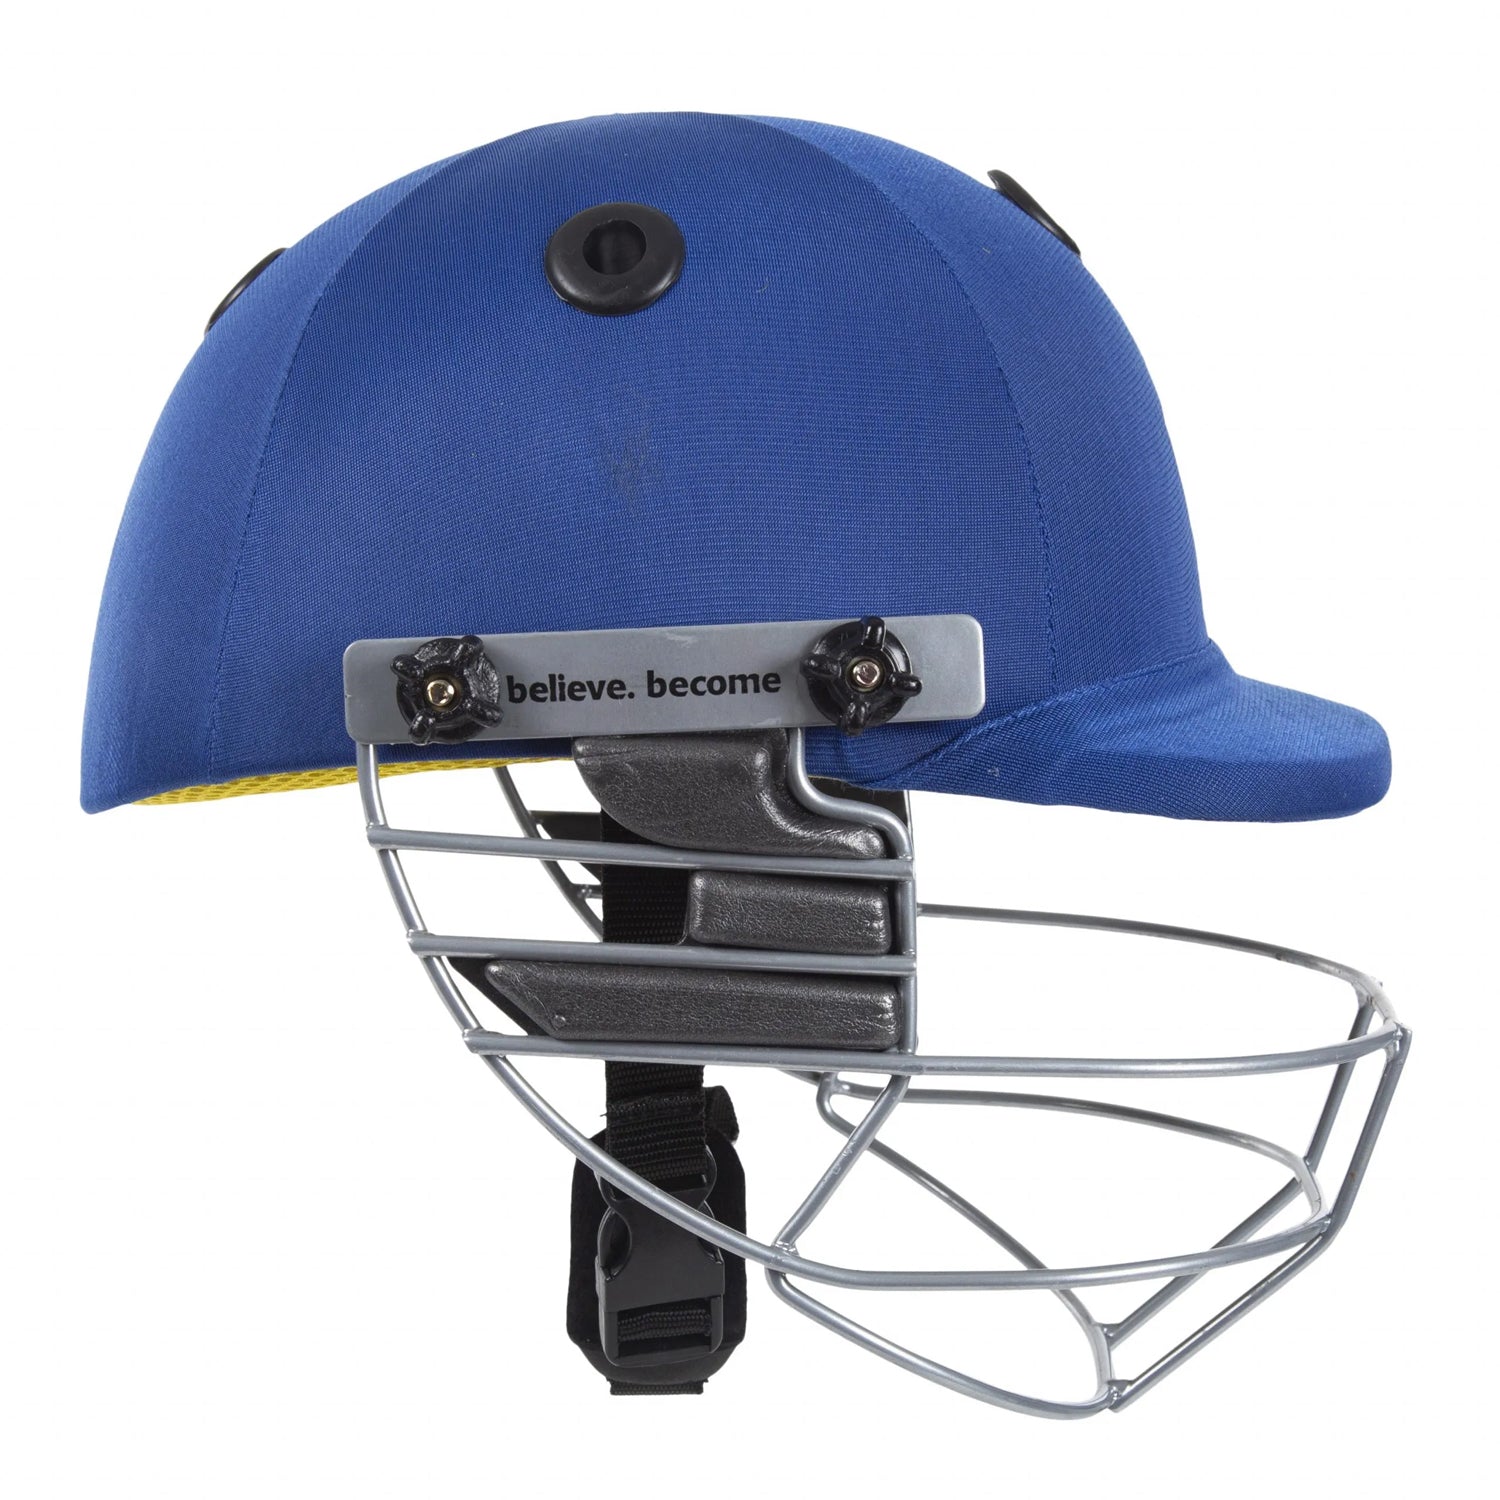 SG BlazeTech Cricket Helmet, Blue - Best Price online Prokicksports.com